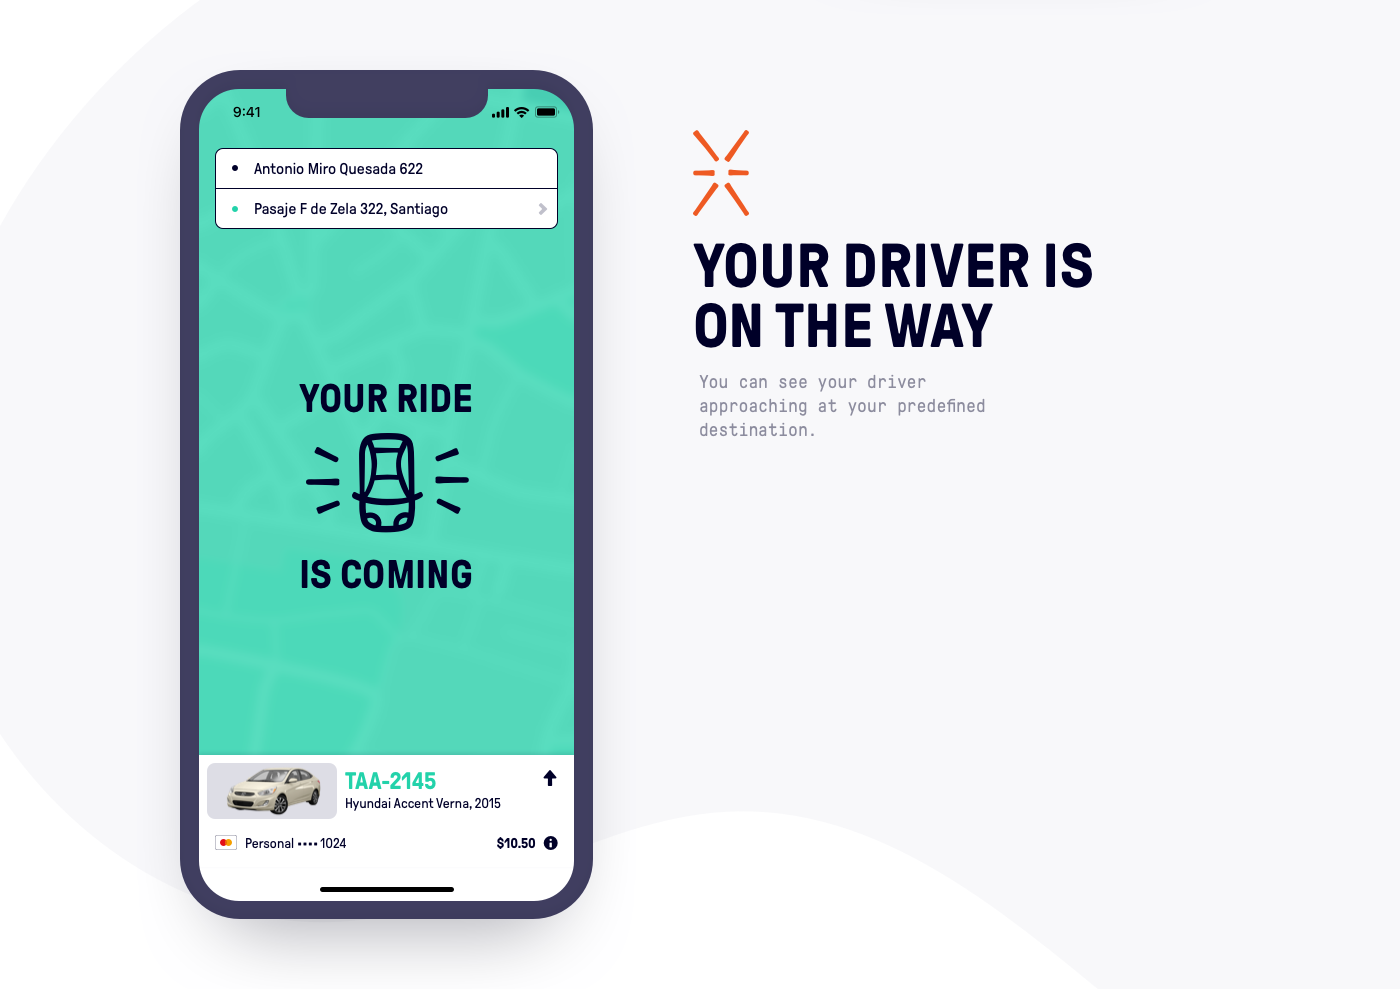 ux UI appflow app mobilepp Appdesign rideapp Ridesharing BEAT beatapp